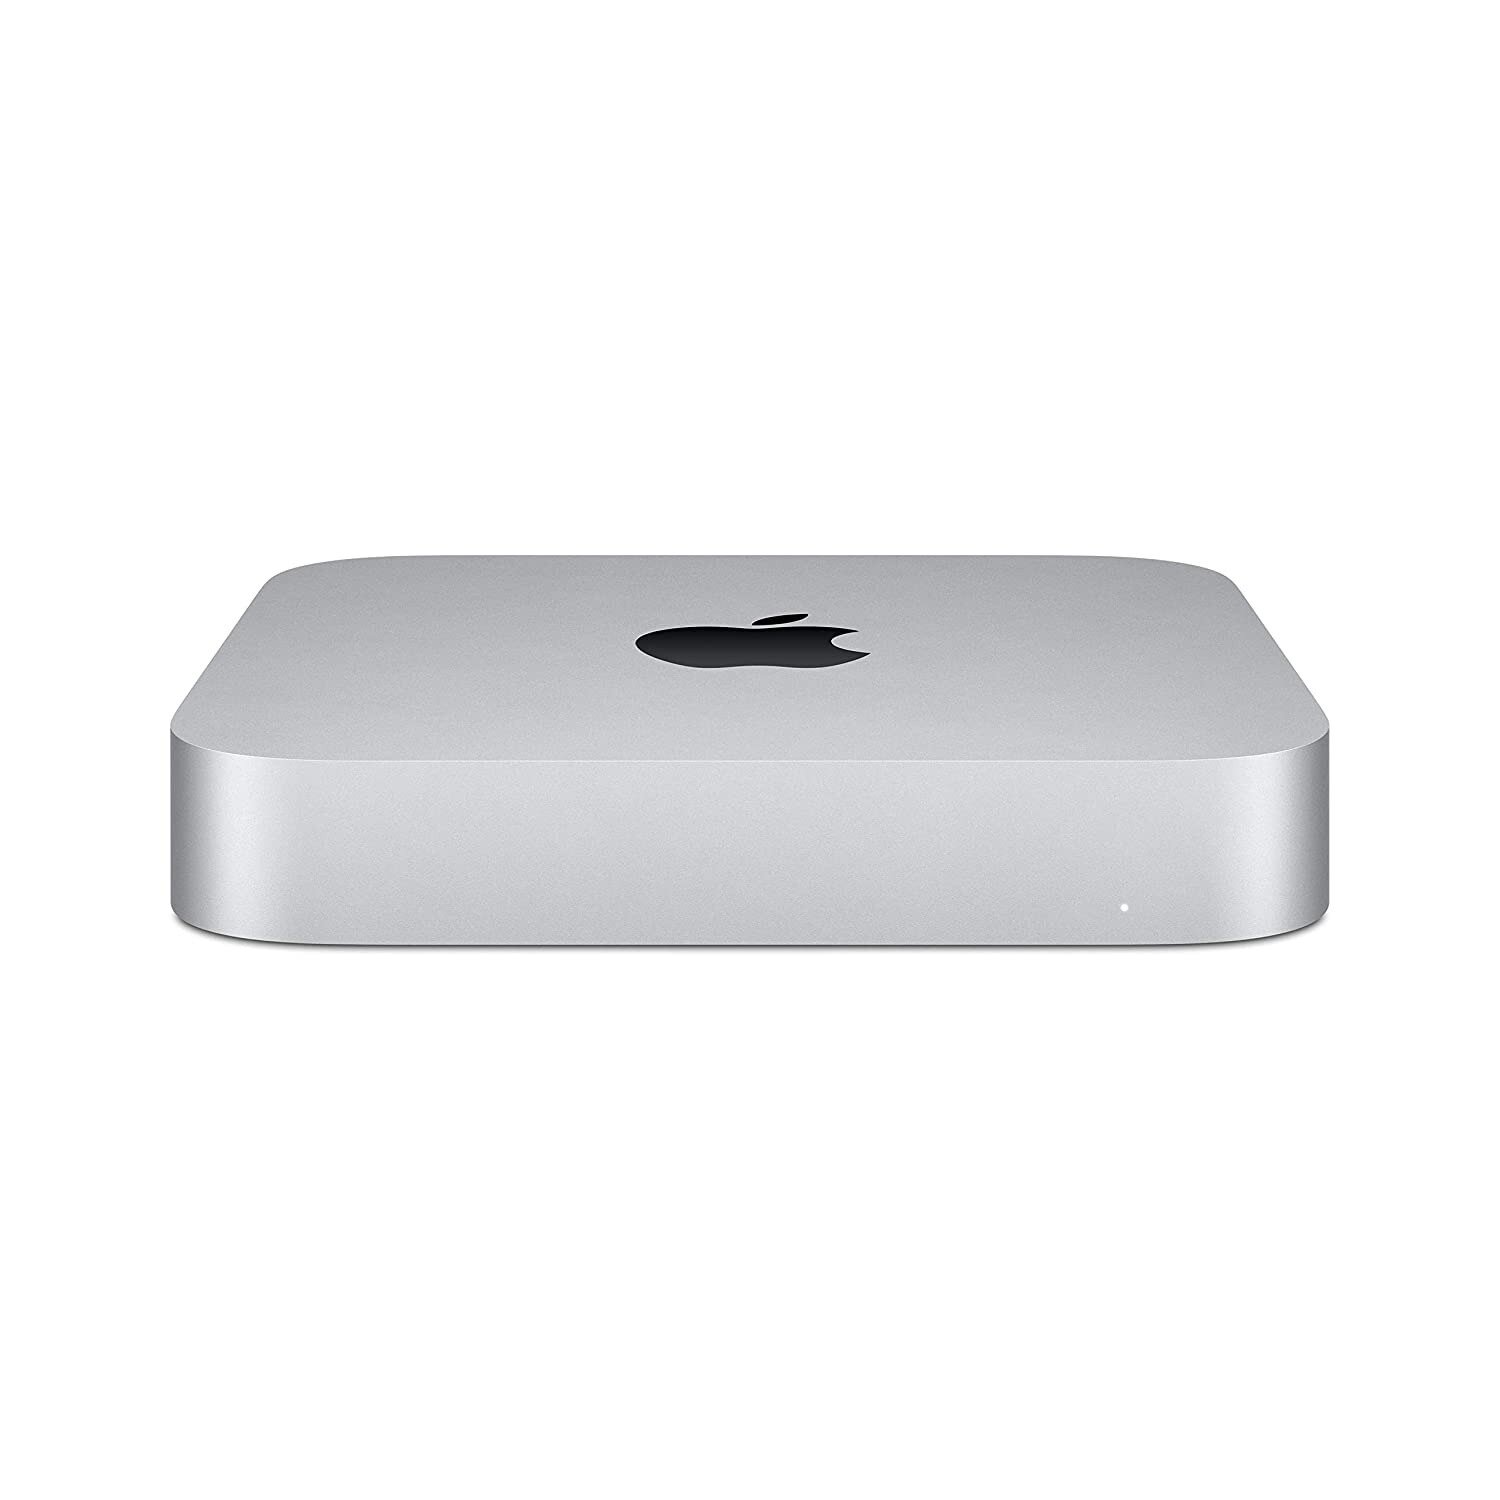 Apple Mac mini (Late 2014) Refurbished - 8GB RAM / 256GB SSD